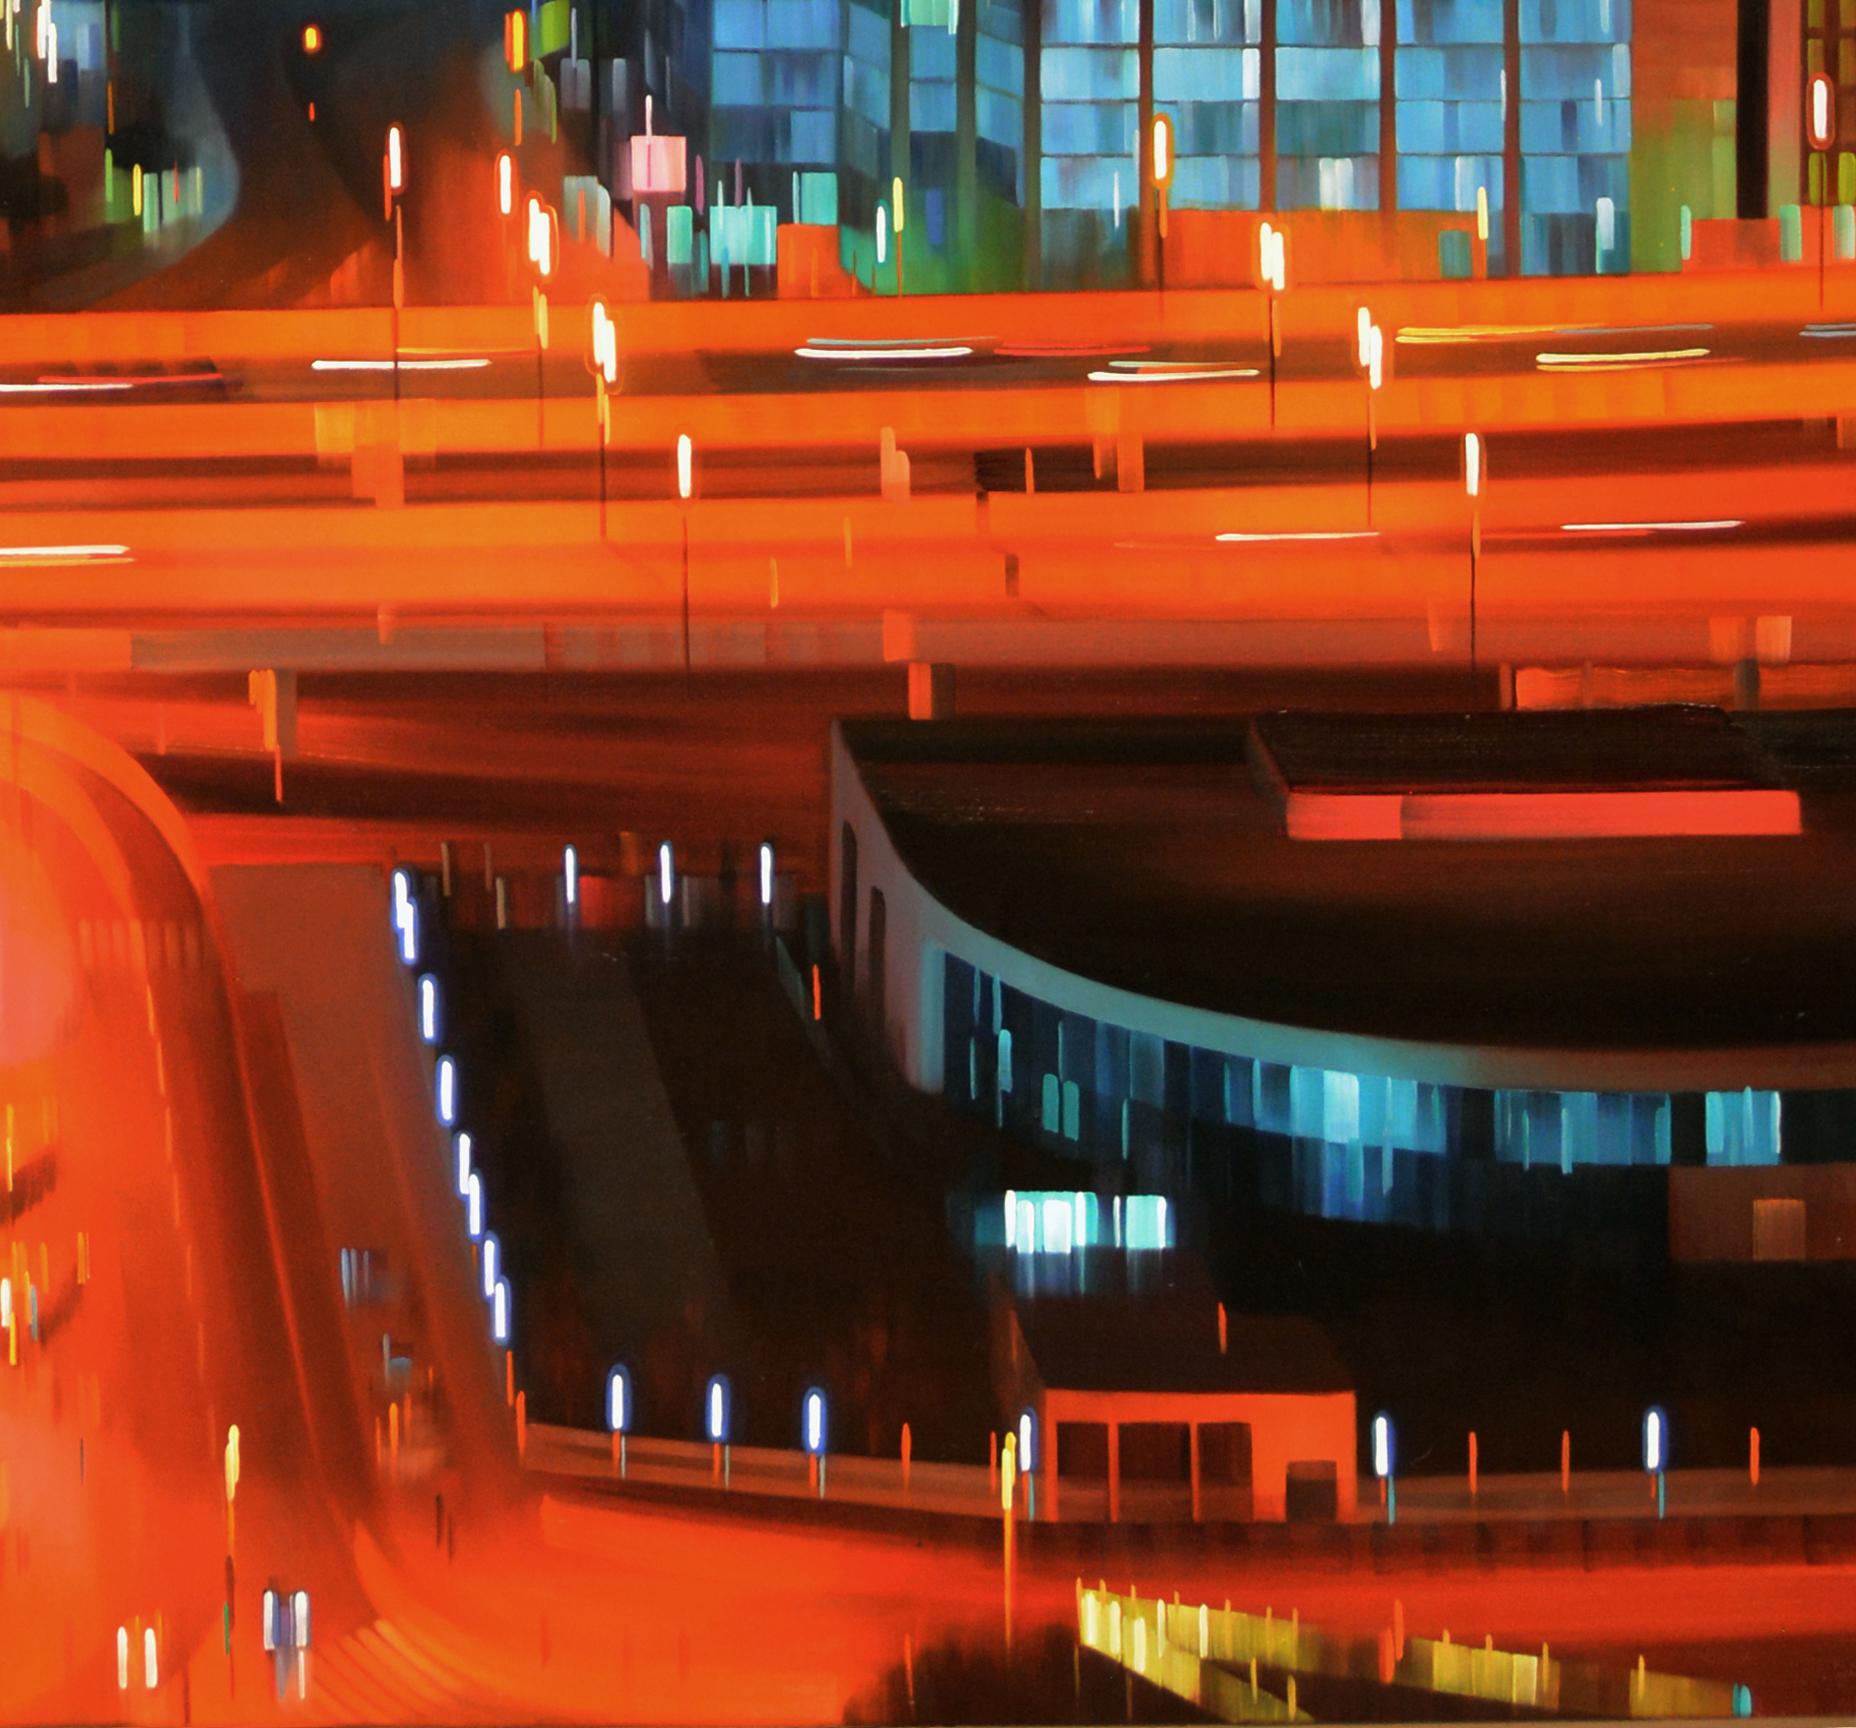 DESERT CITY, city lights, hyper-realist, cityscape, vivid colors, night scene - Contemporary Painting by Alexandra Pacula